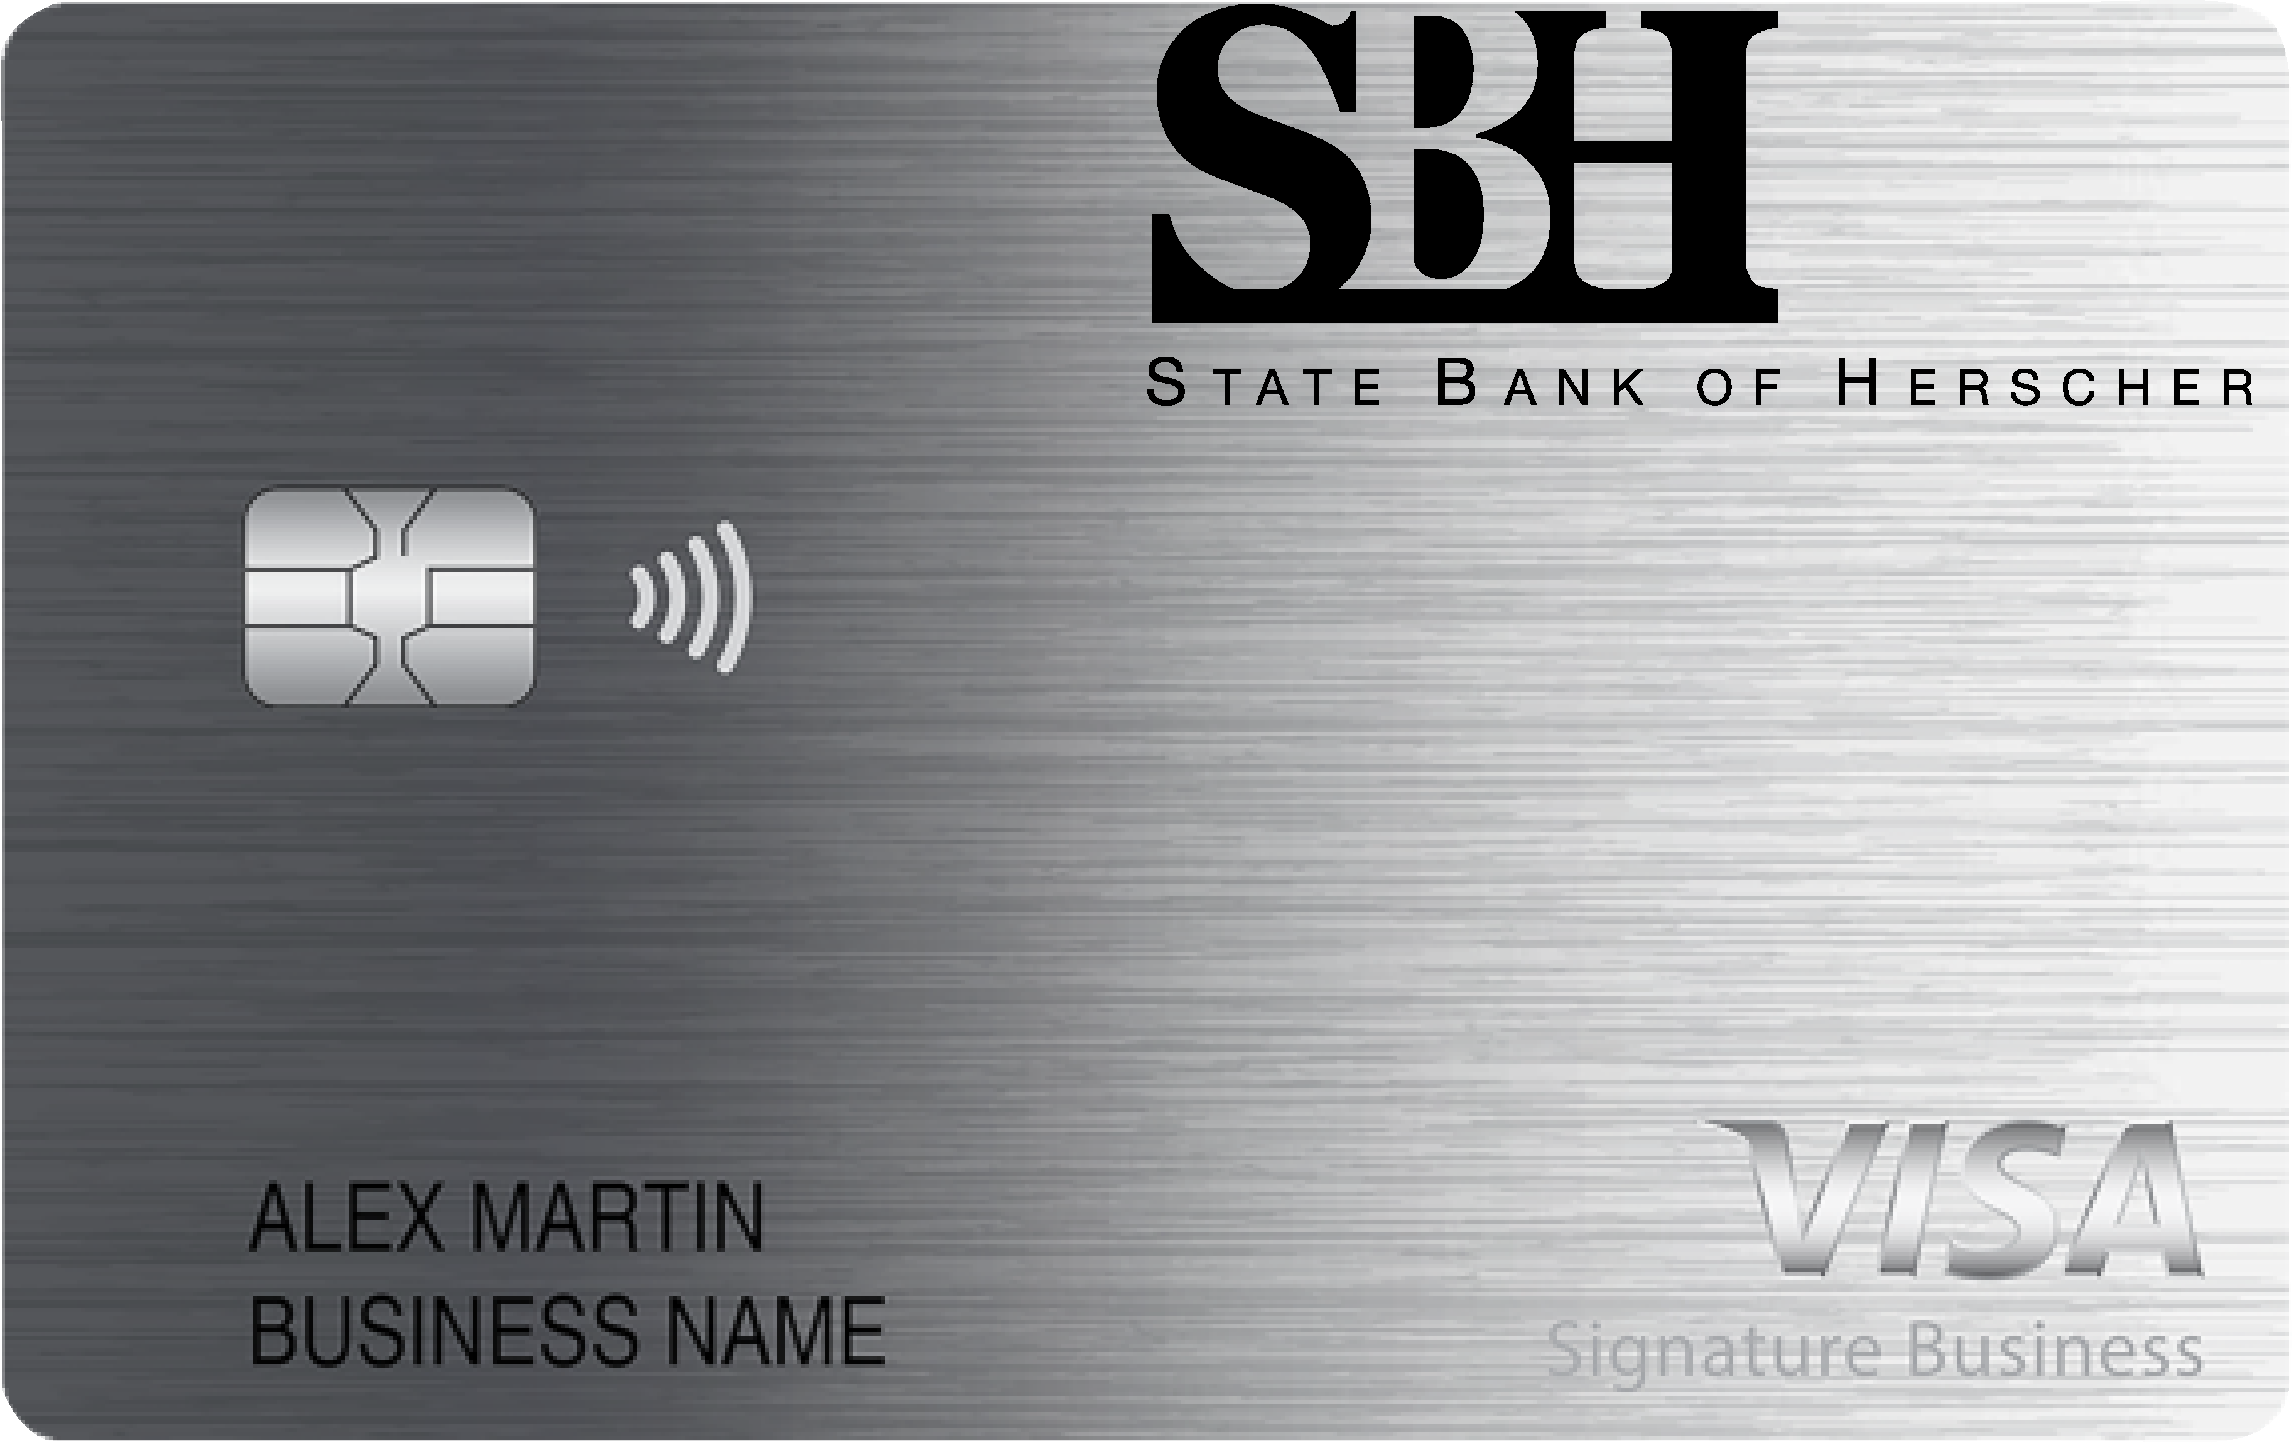 State Bank of Herscher Smart Business Rewards Card